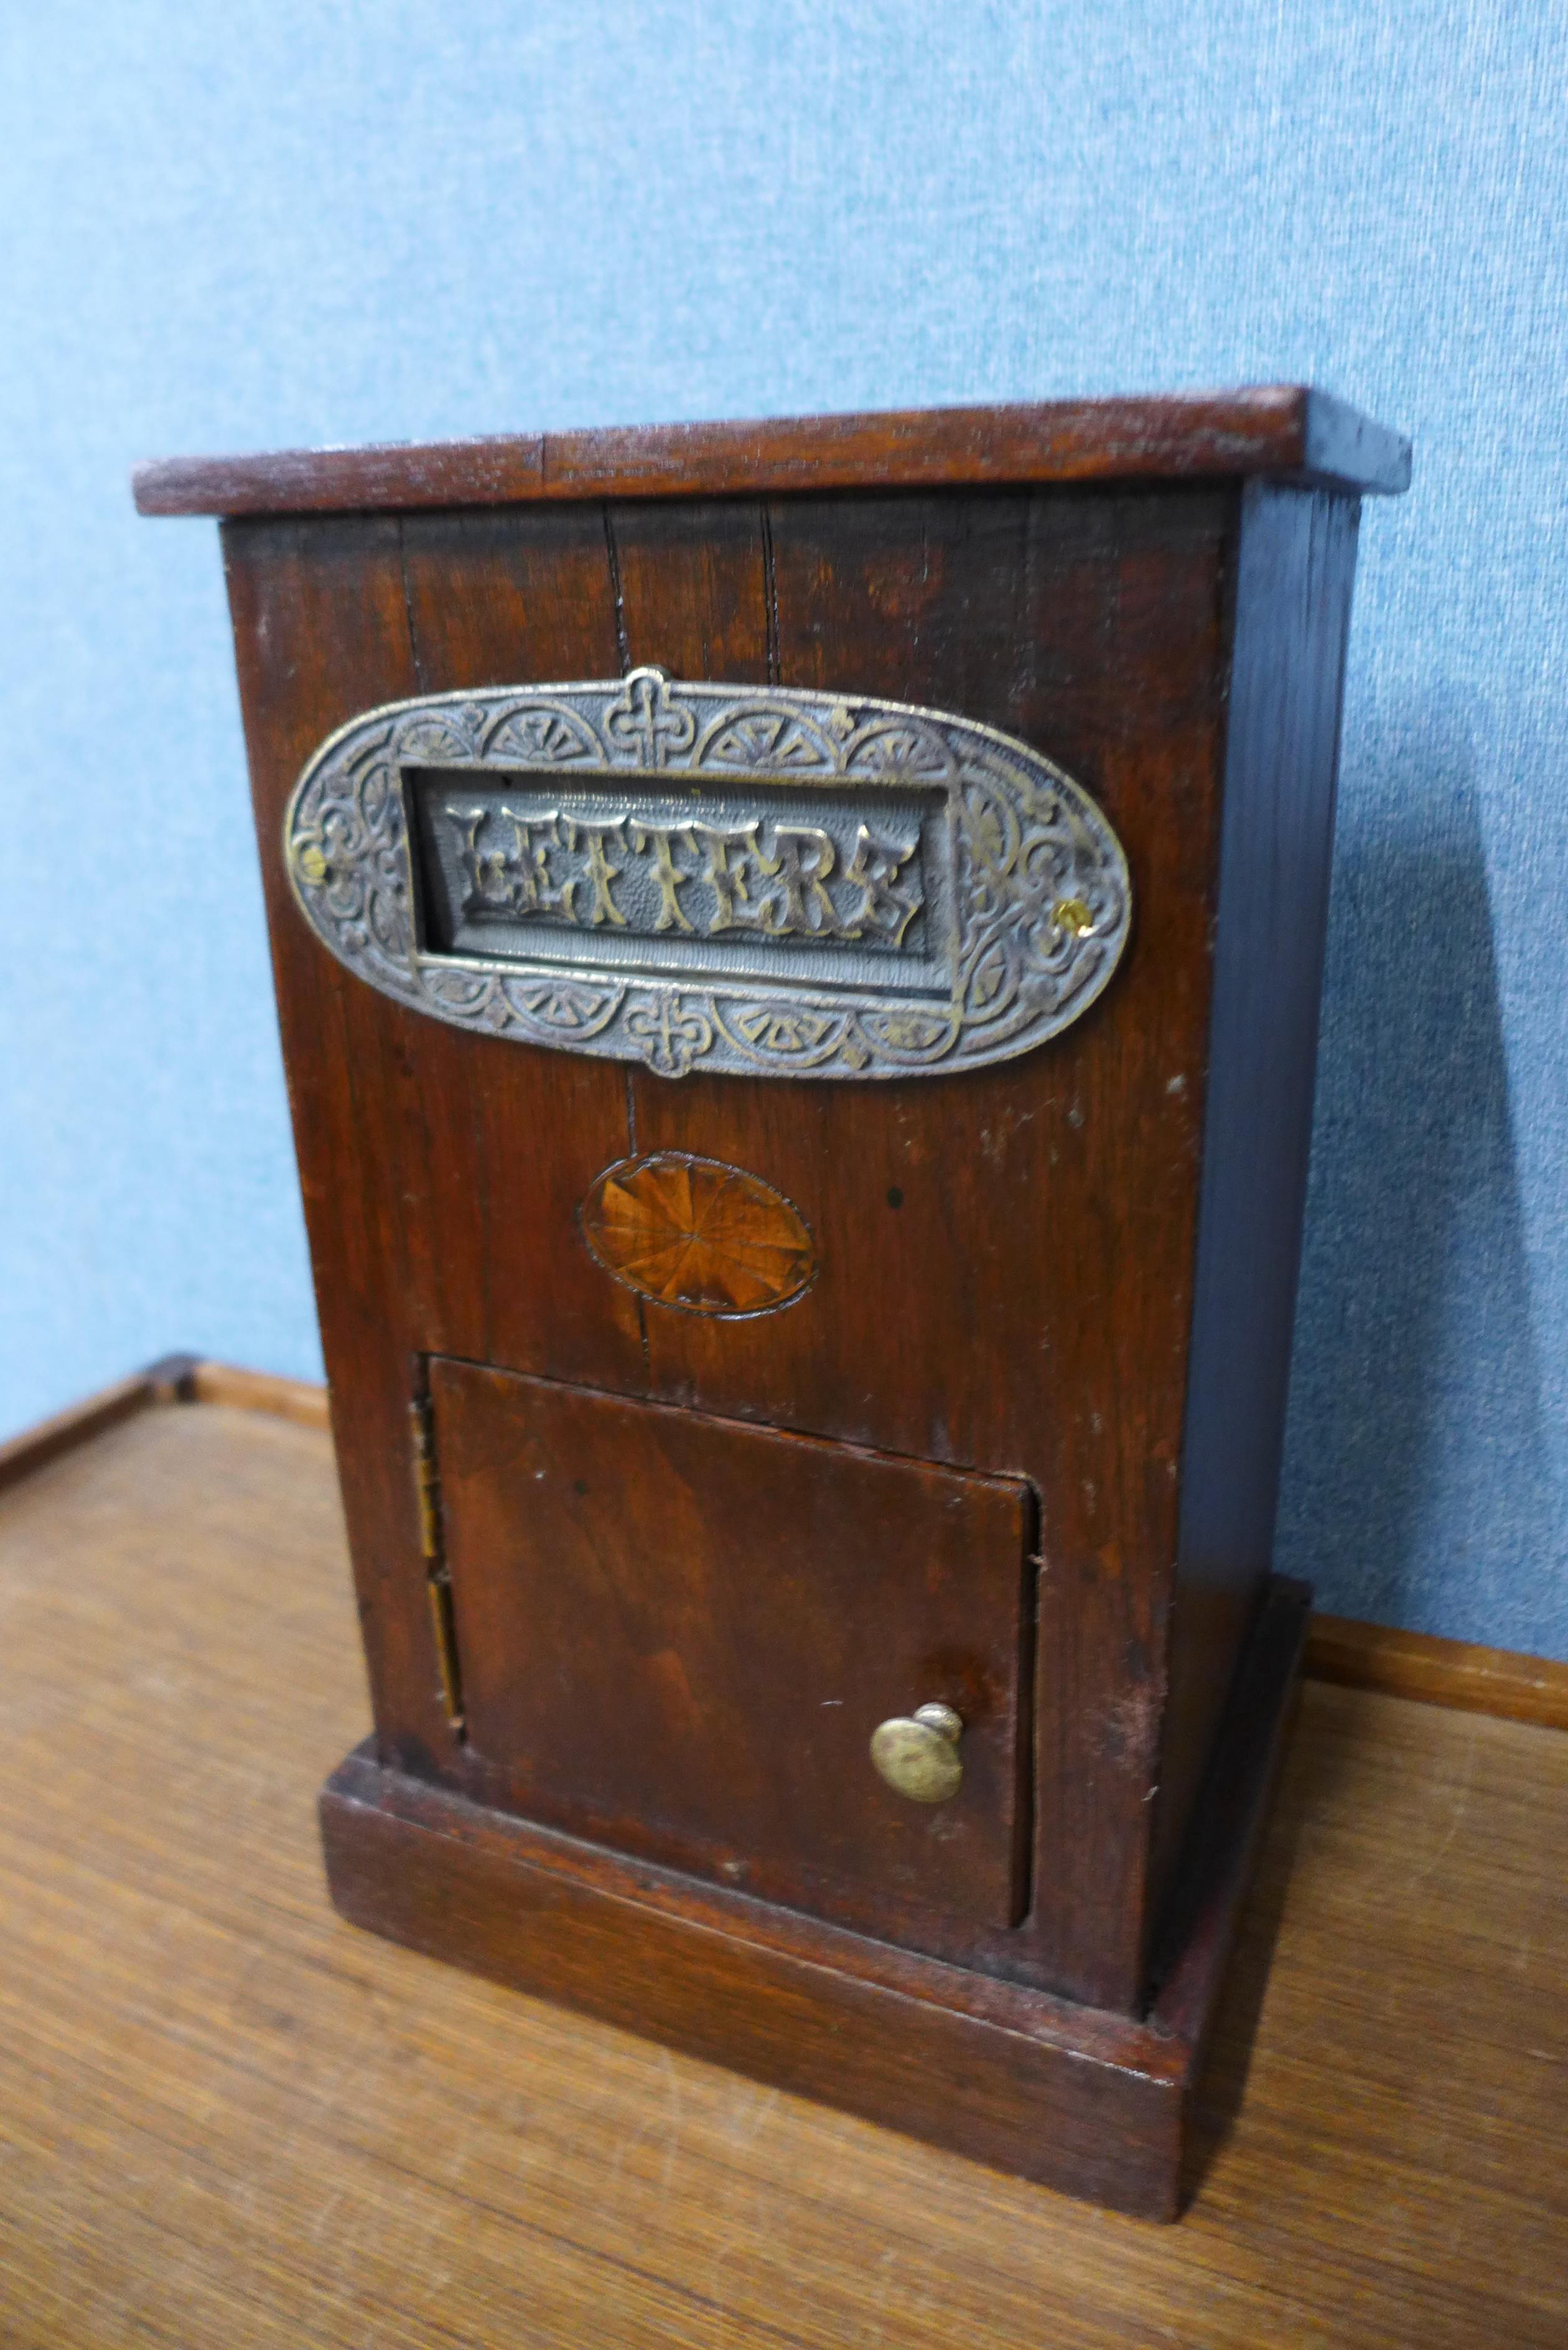 A small beech letter box